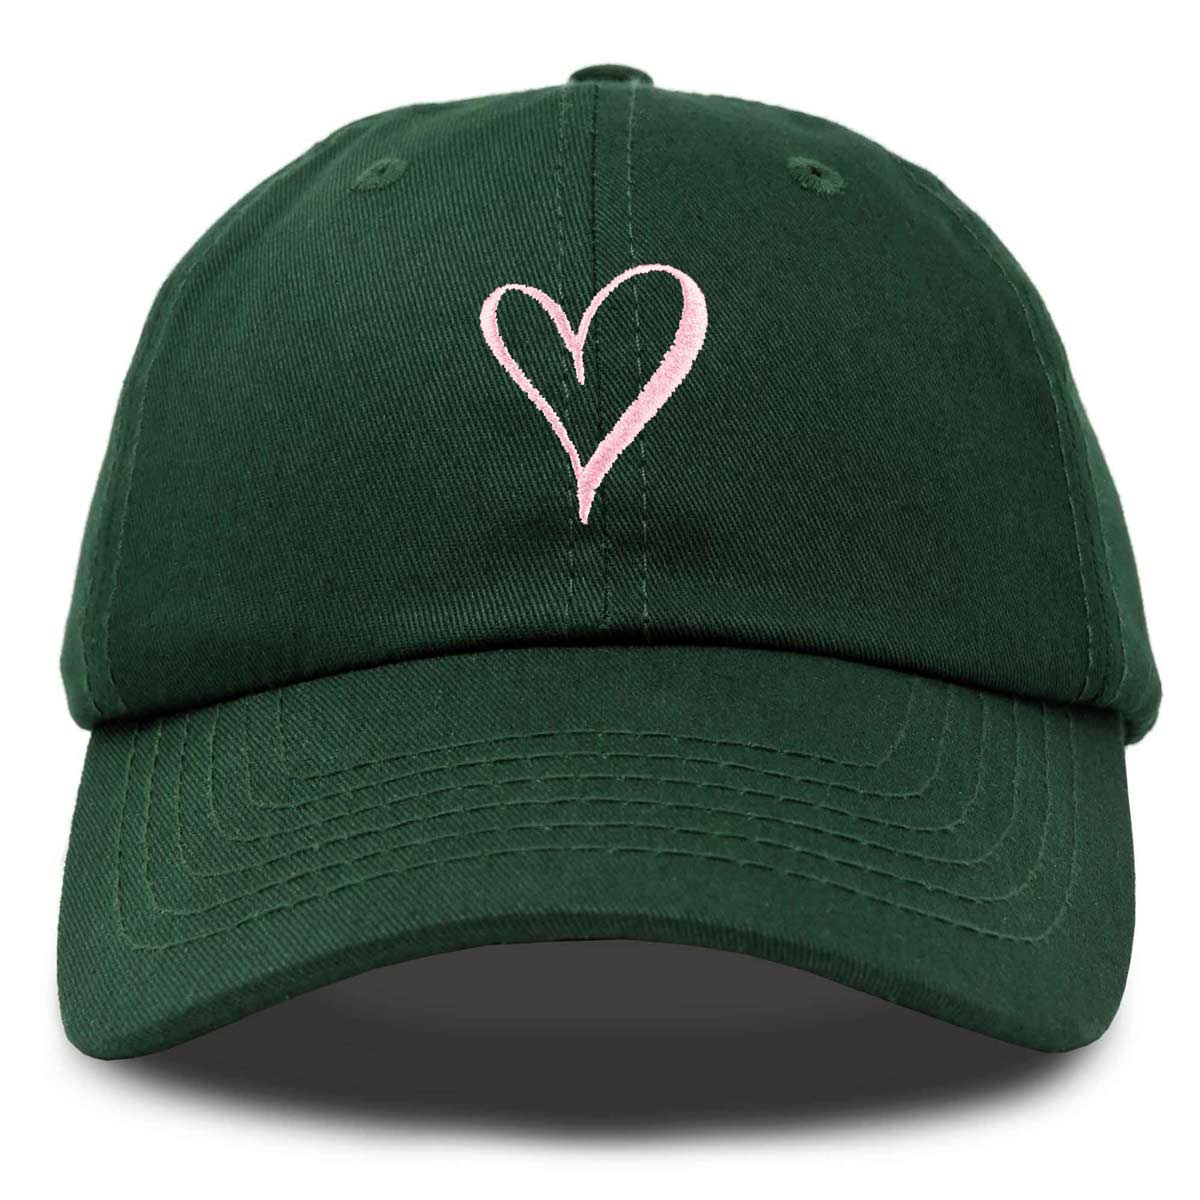 Dalix Heart Hat